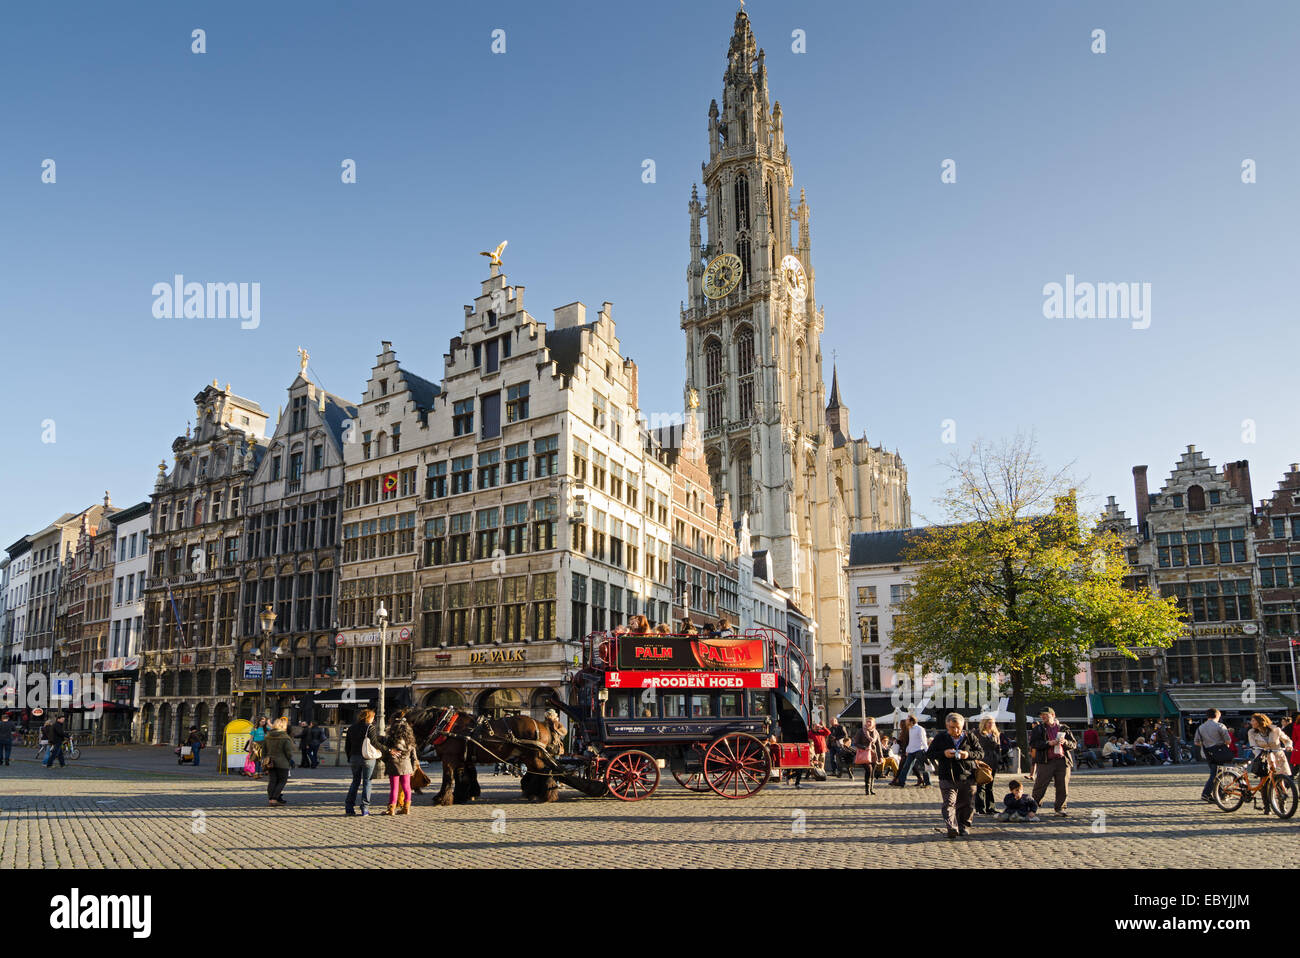 Antwerpen, Belgien - 26. Oktober: Der Grote Markt, Marktplatz mit den historischen Wagen am 26. Oktober 2013 in in Antwerpen, Belgien. Stockfoto